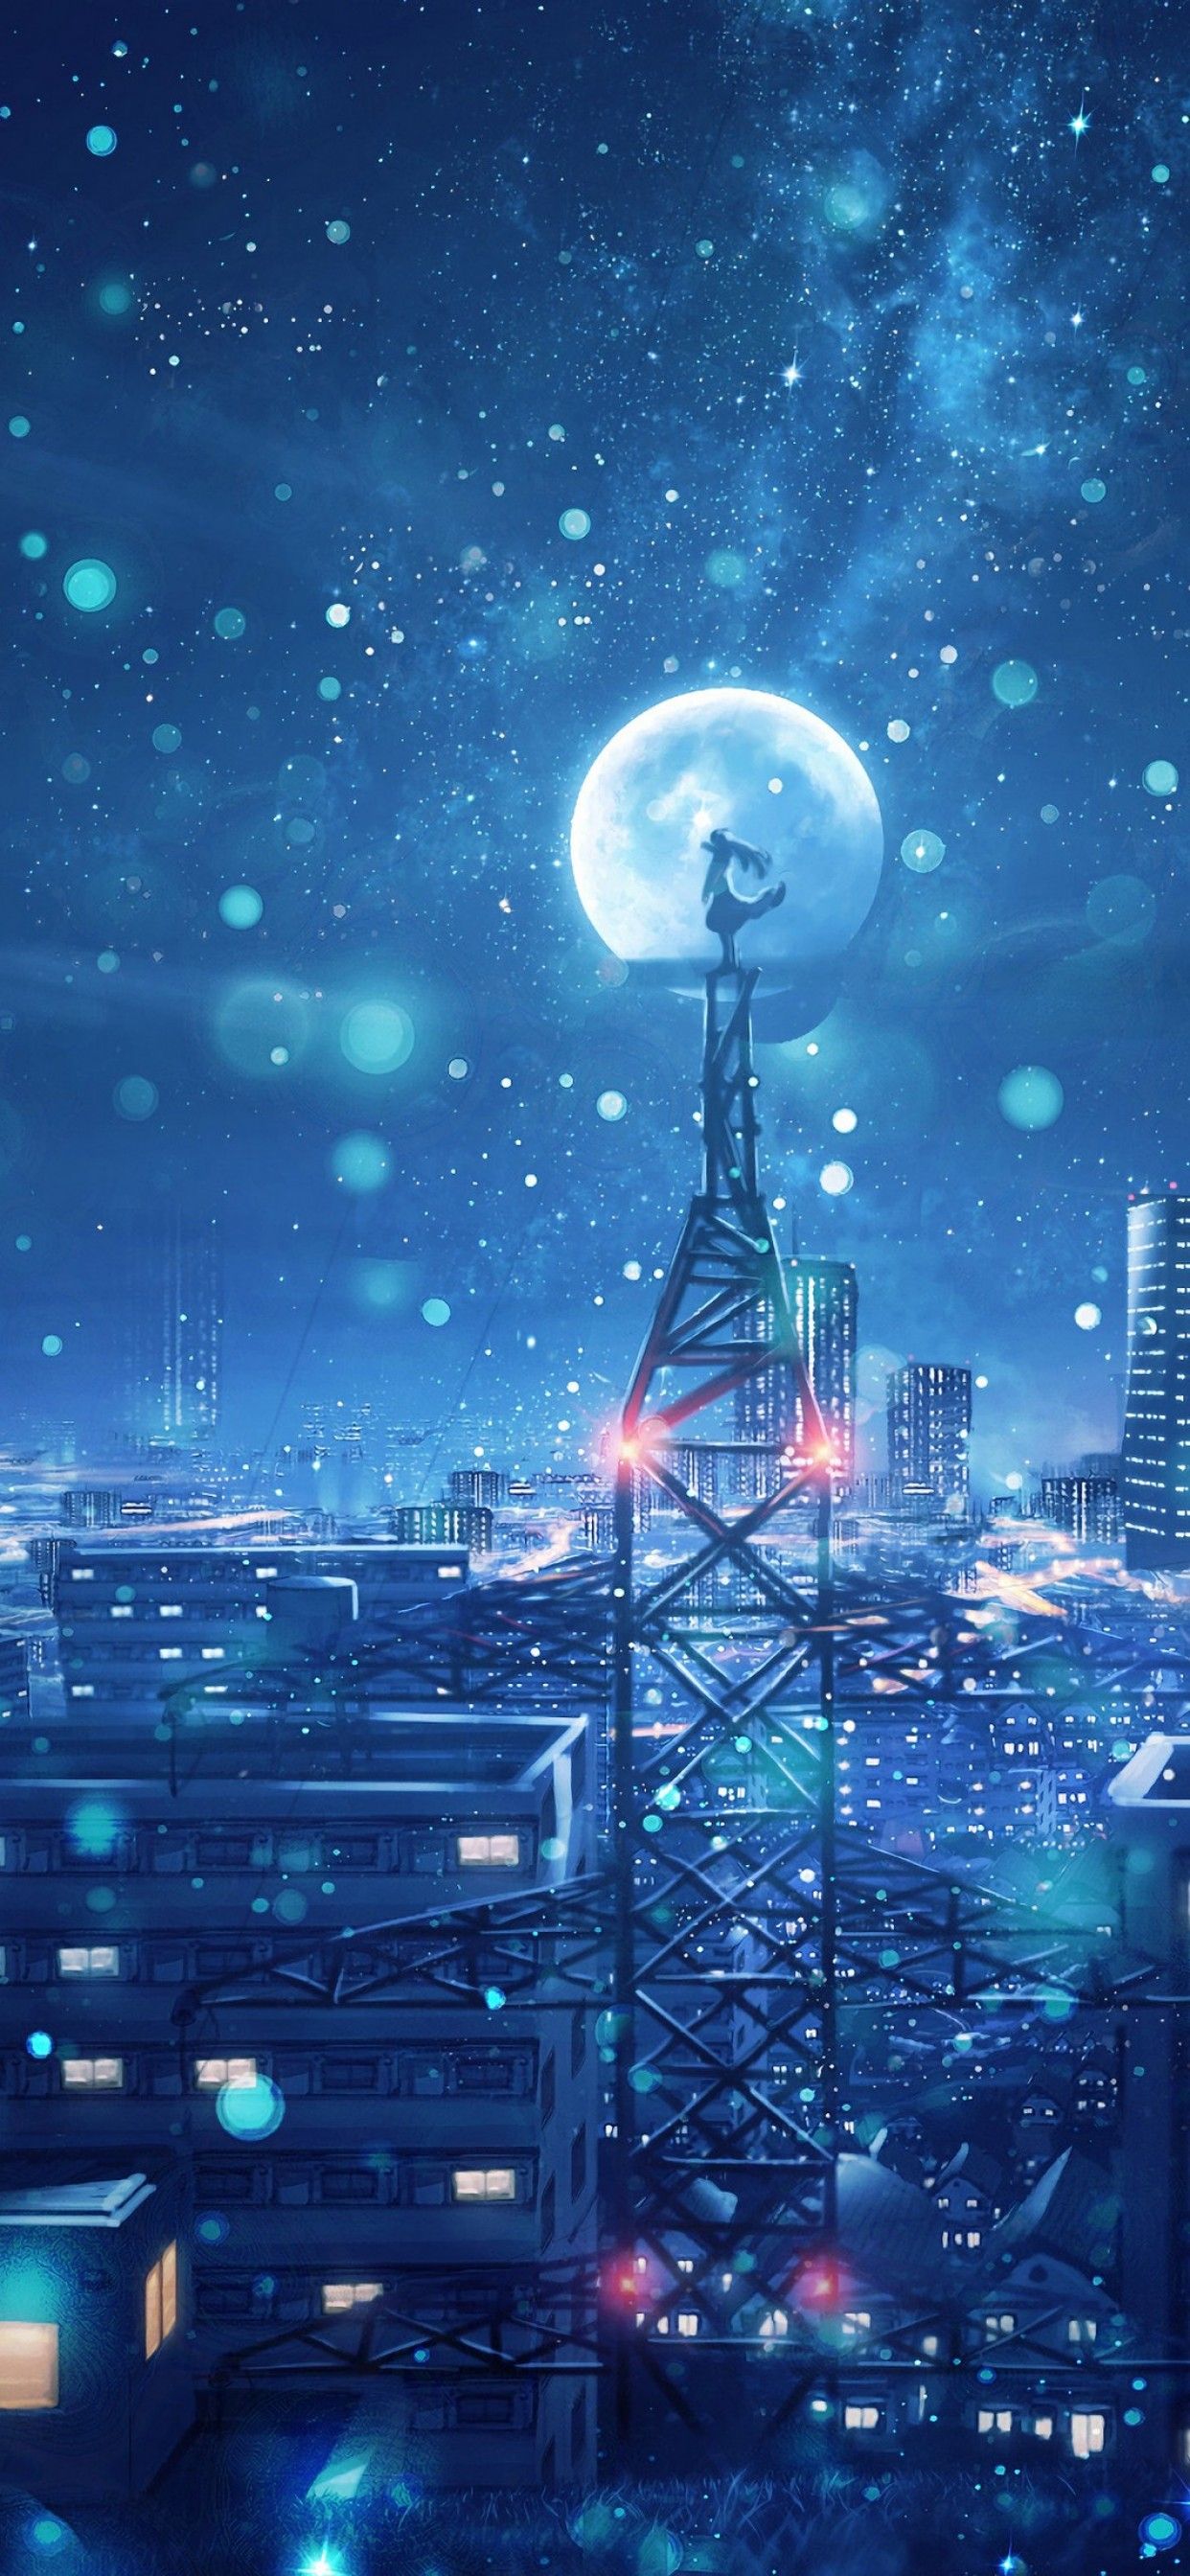 Dream 4K Wallpaper, Blue, Cityscape, Snowfall, Moon, Cold night, Fantasy